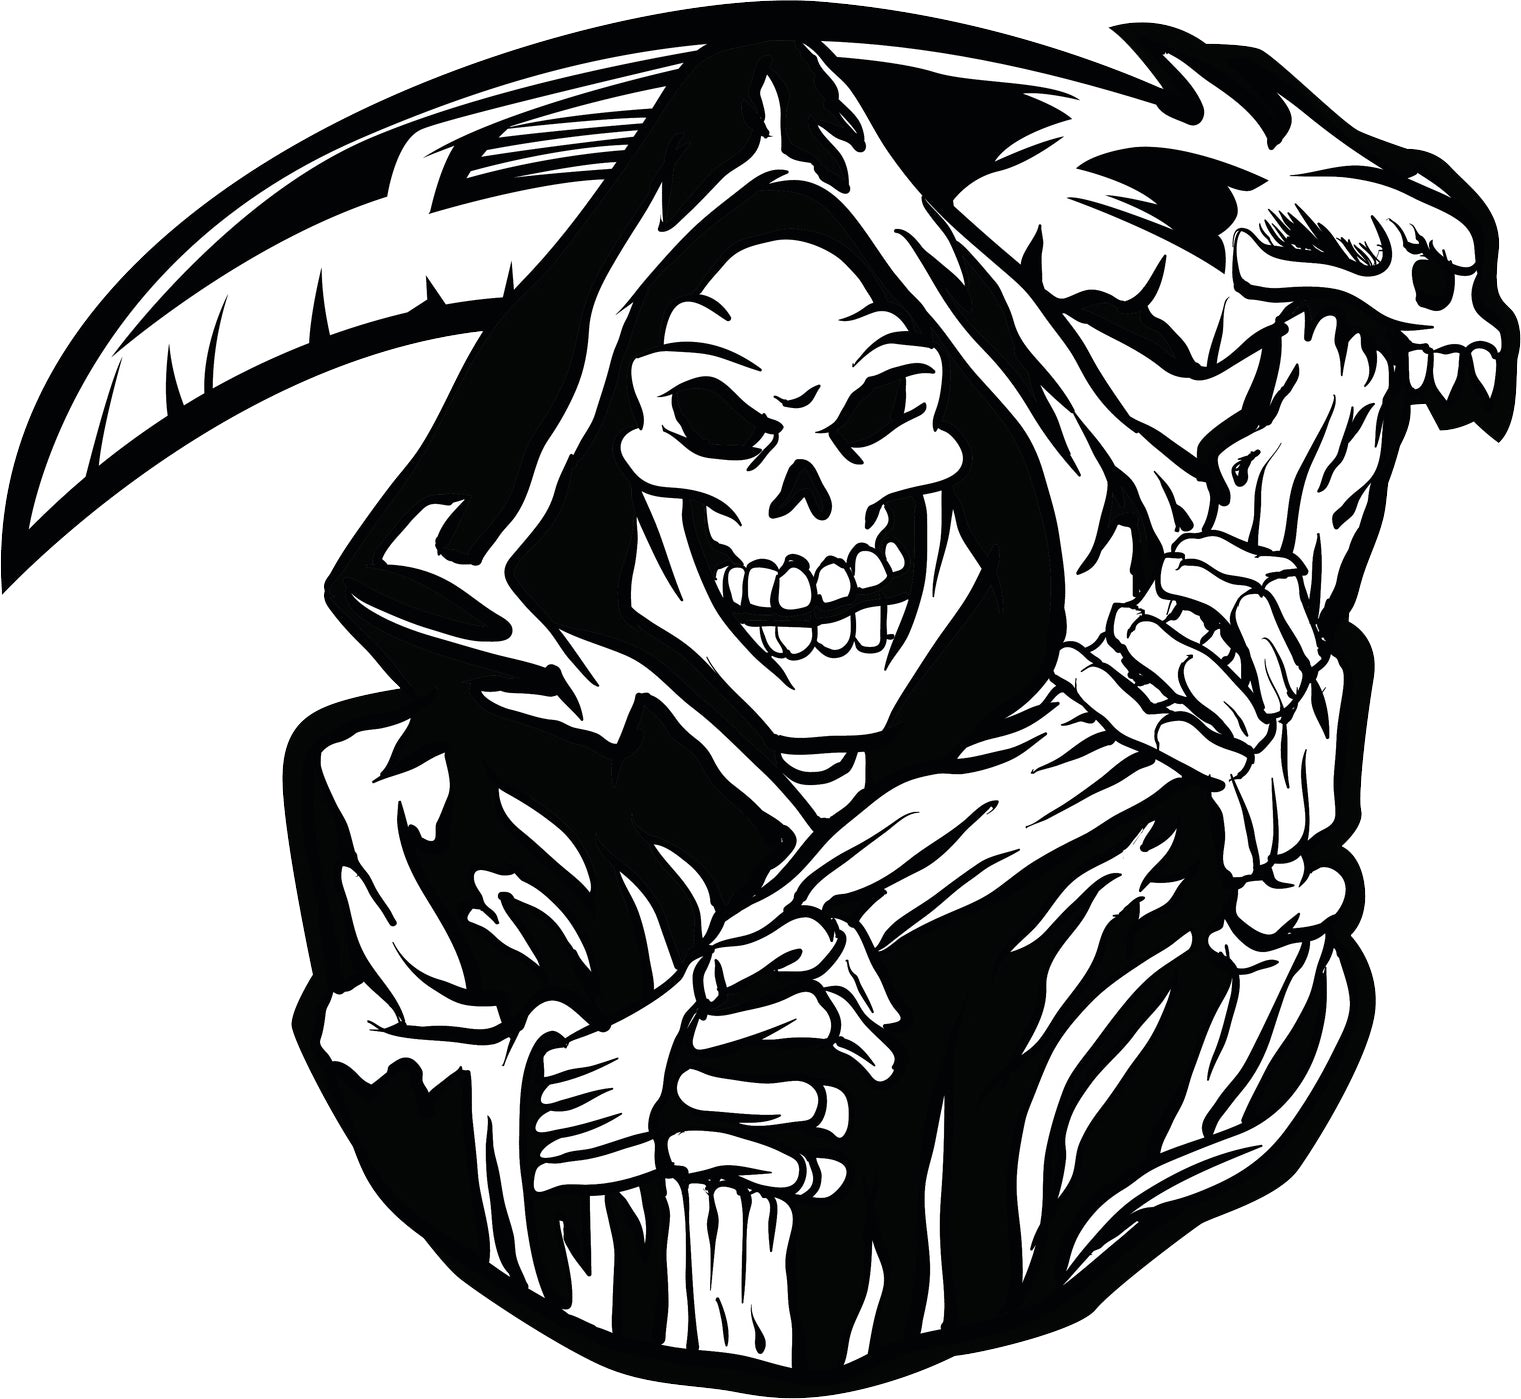 Creepy Black and White Grimm Reaper Skeleton Halloween Cartoon Vinyl Decal Sticker